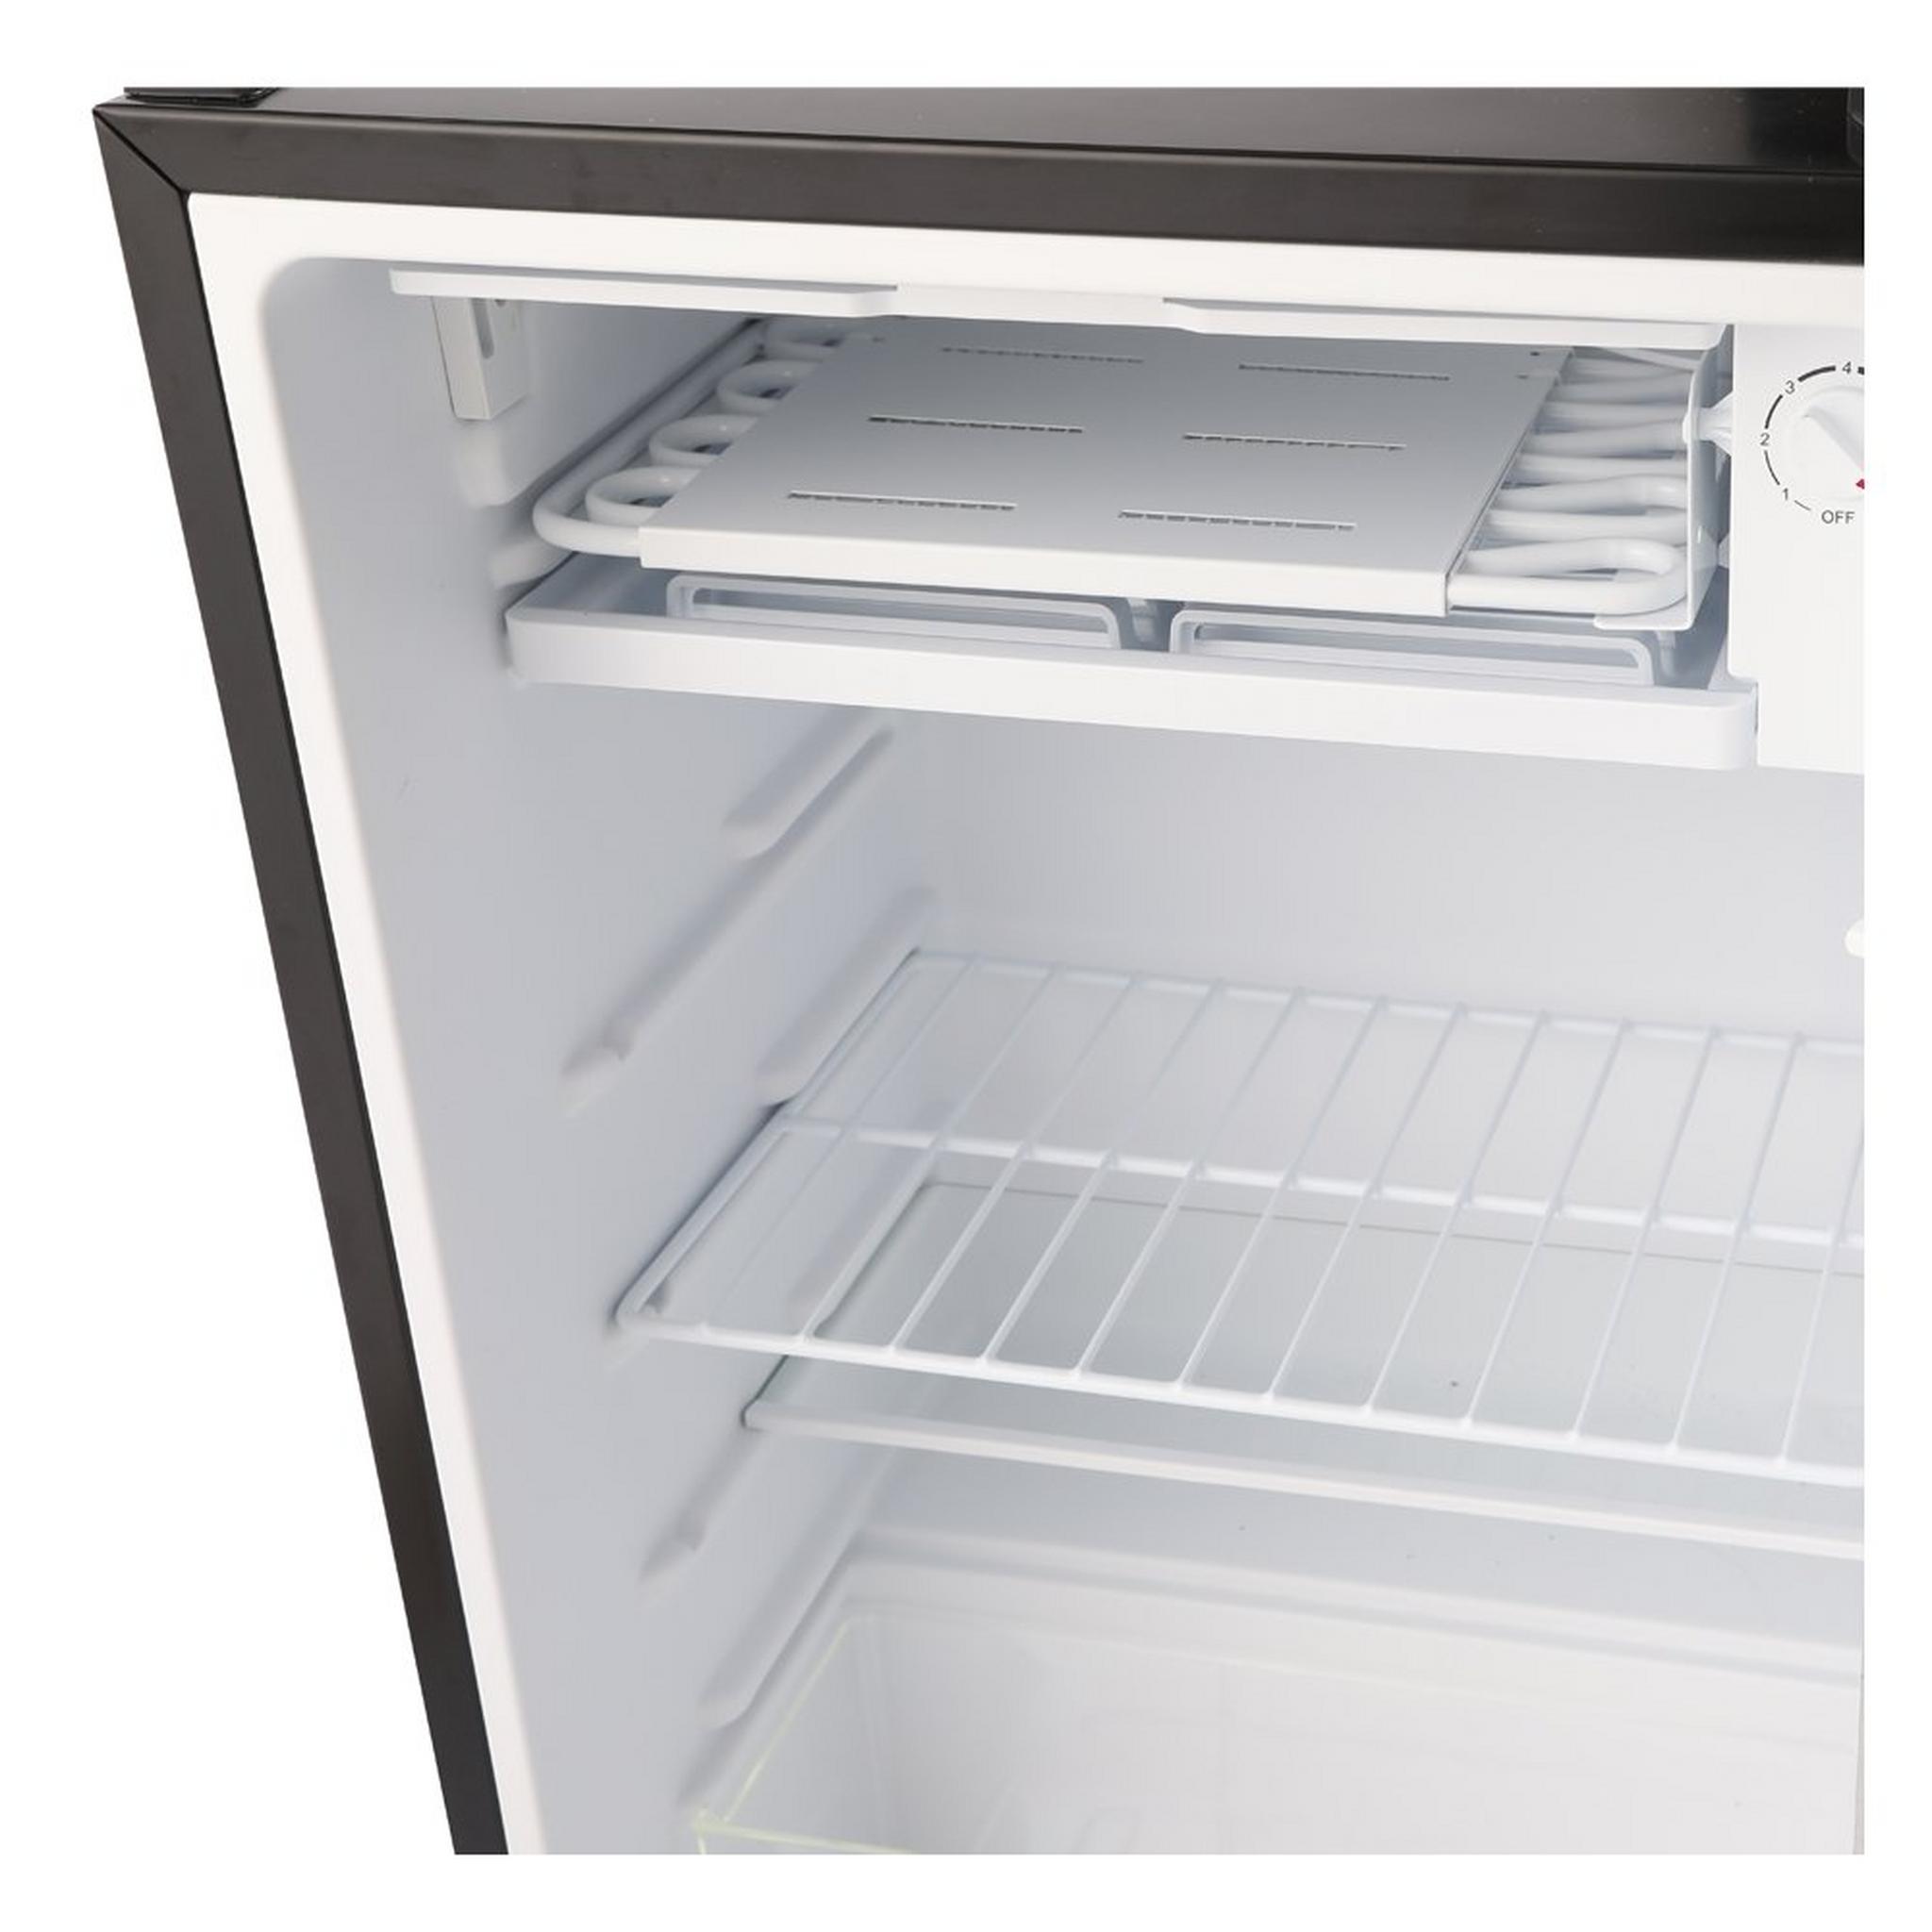 Wansa Single Door Refrigerator, 3.5CFT, 101-Liters, WROW-101-DBLC5 - Black